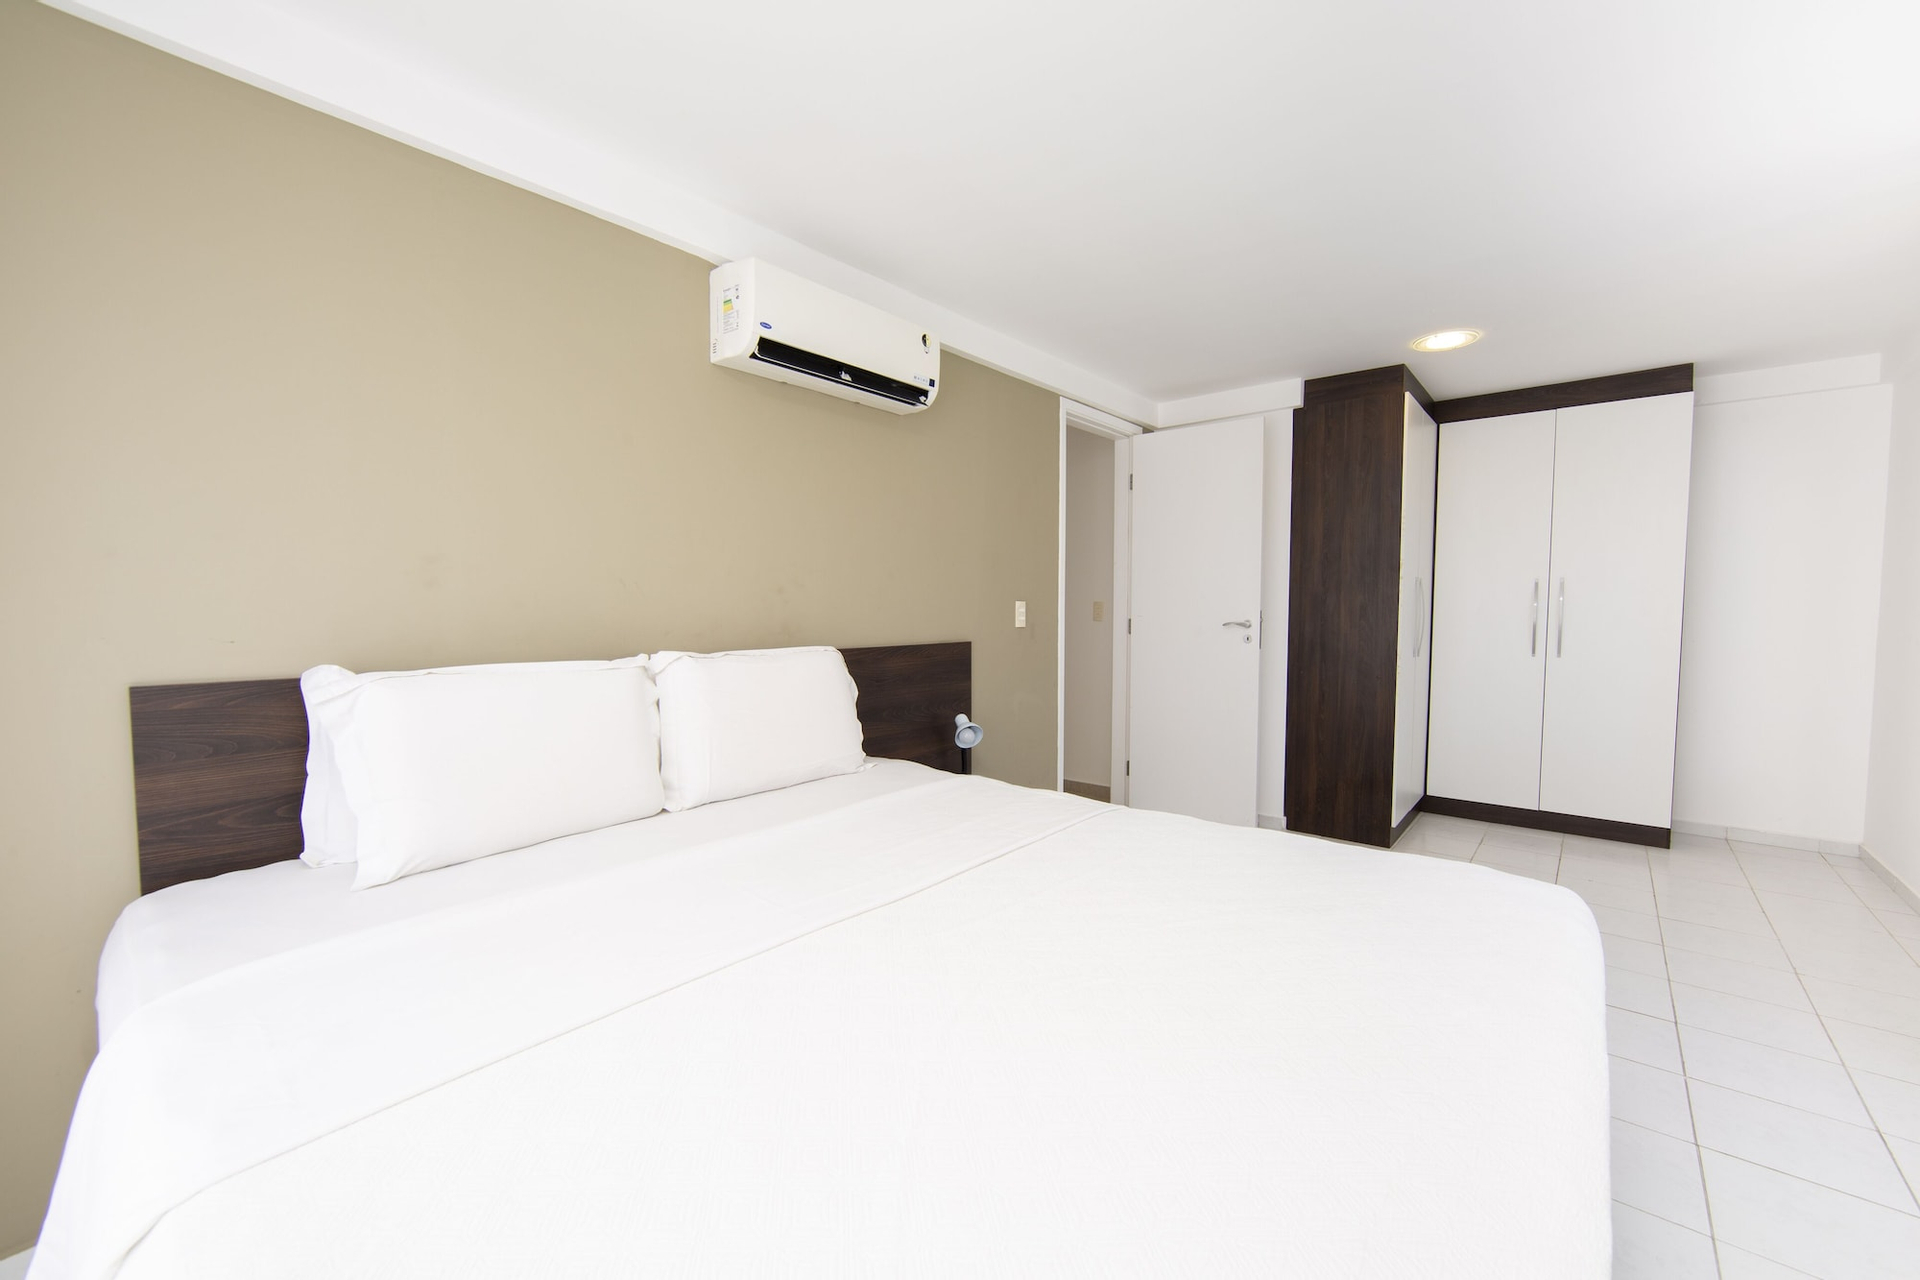 Bedroom 1, Flat casal com vista mar em Natal RN por Carpediem, Natal